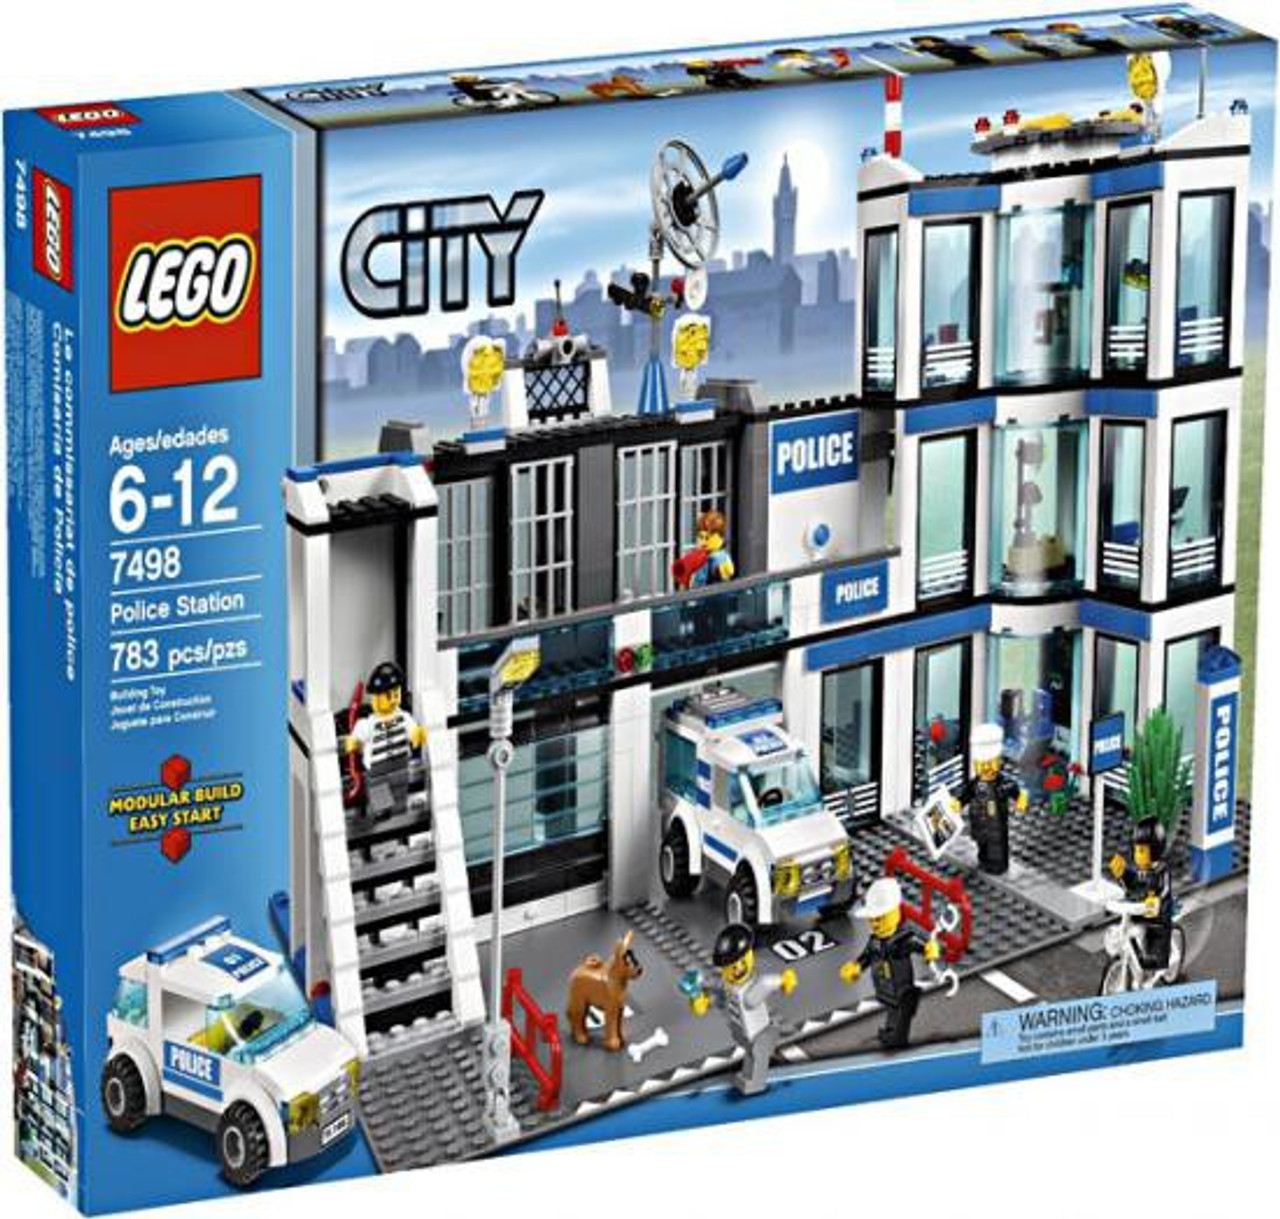 LEGO City Police Station Set 7498 - ToyWiz